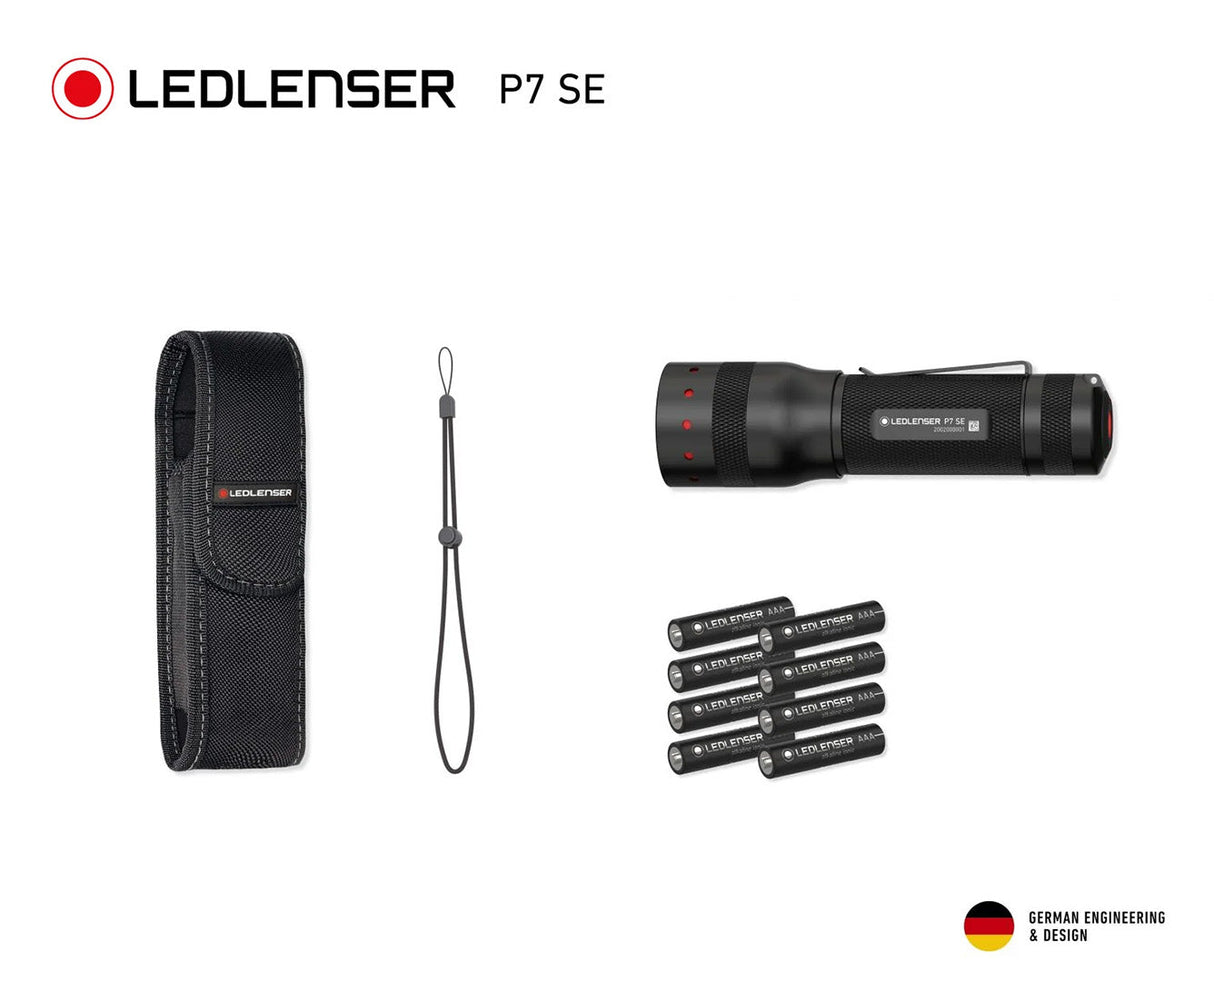 Ledlenser P7 SE Special Edition LED Torch